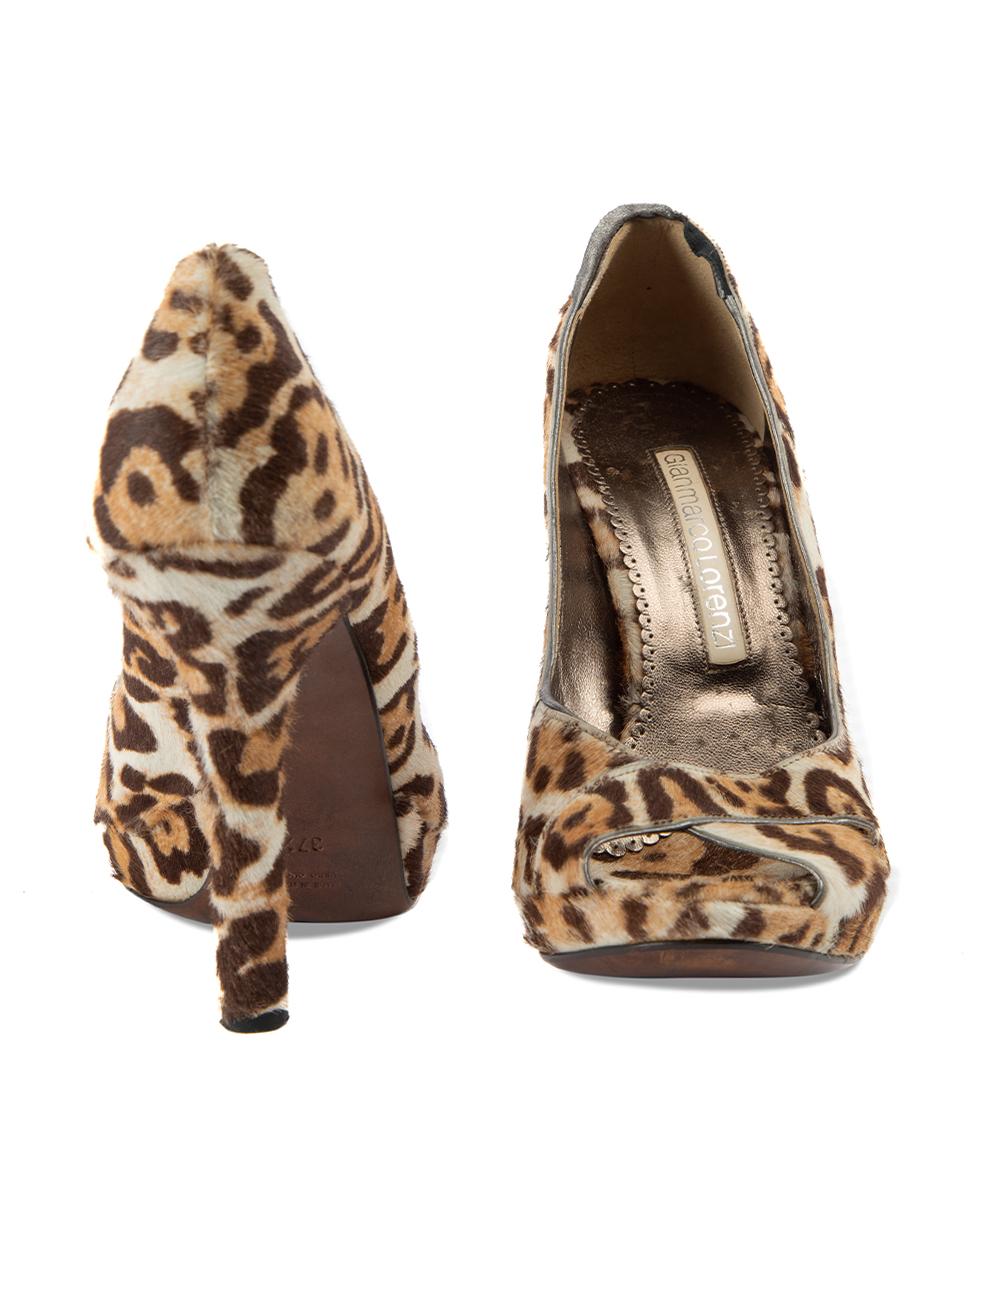 Pre-Loved Gianmarco Lorenzi Women's Leopard Print Ponyhair Peep Toe Heels In Excellent Condition For Sale In London, GB